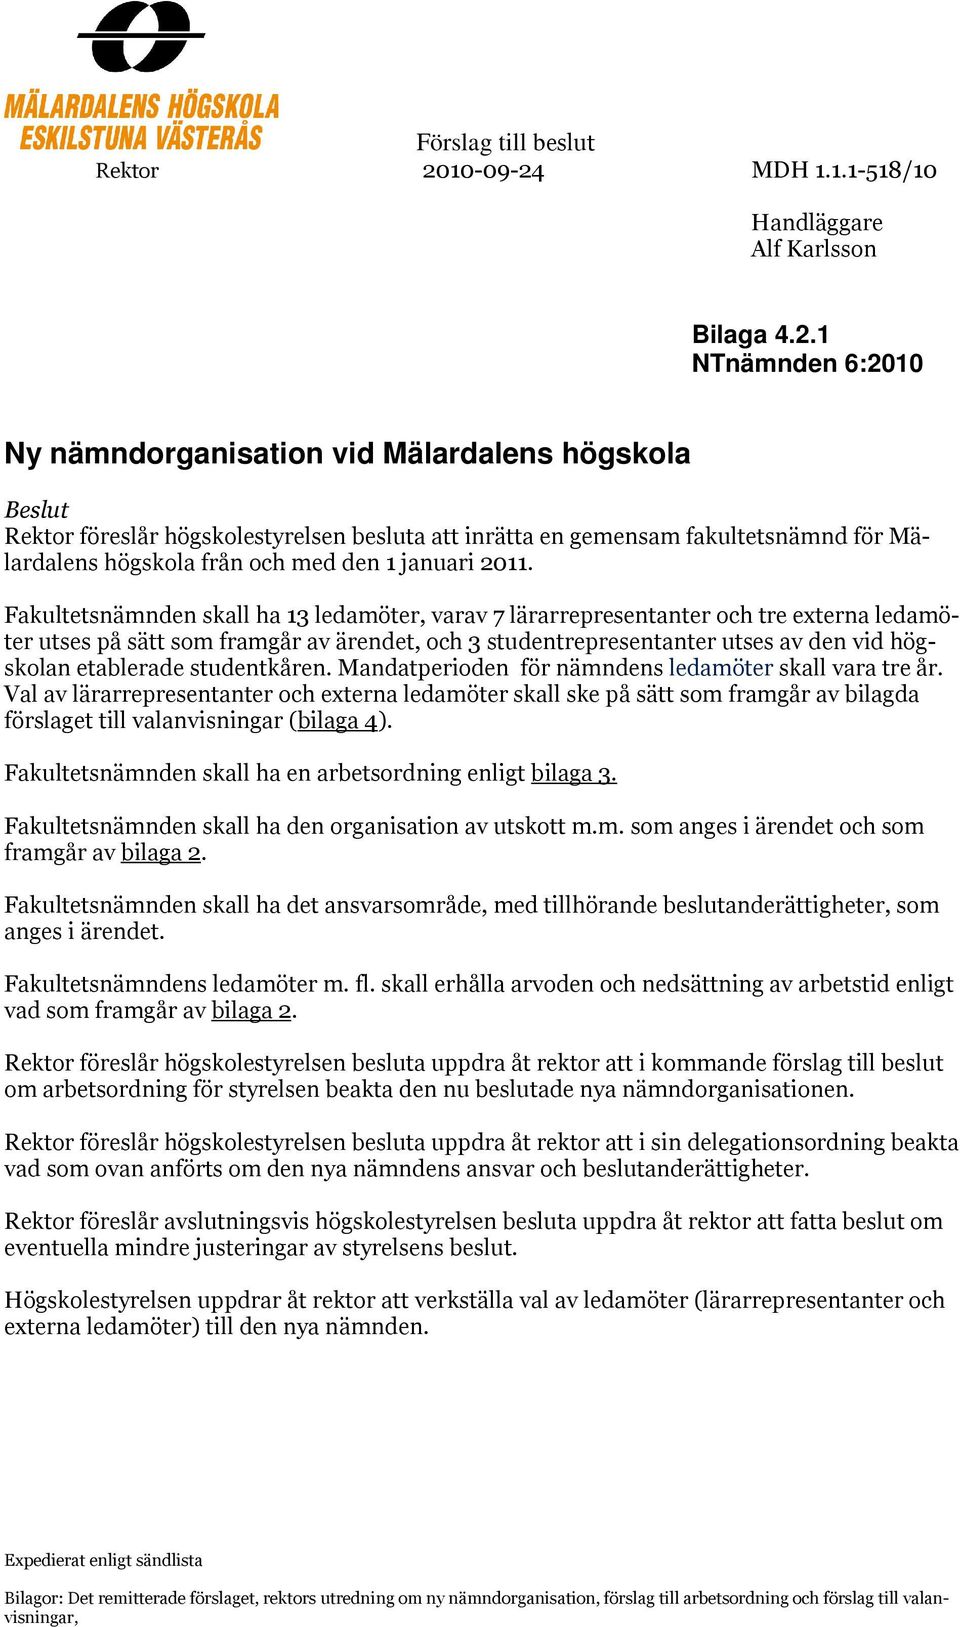 MDH 1.1.1-518/10 Handläggare Alf Karlsson Bilaga 4.2.